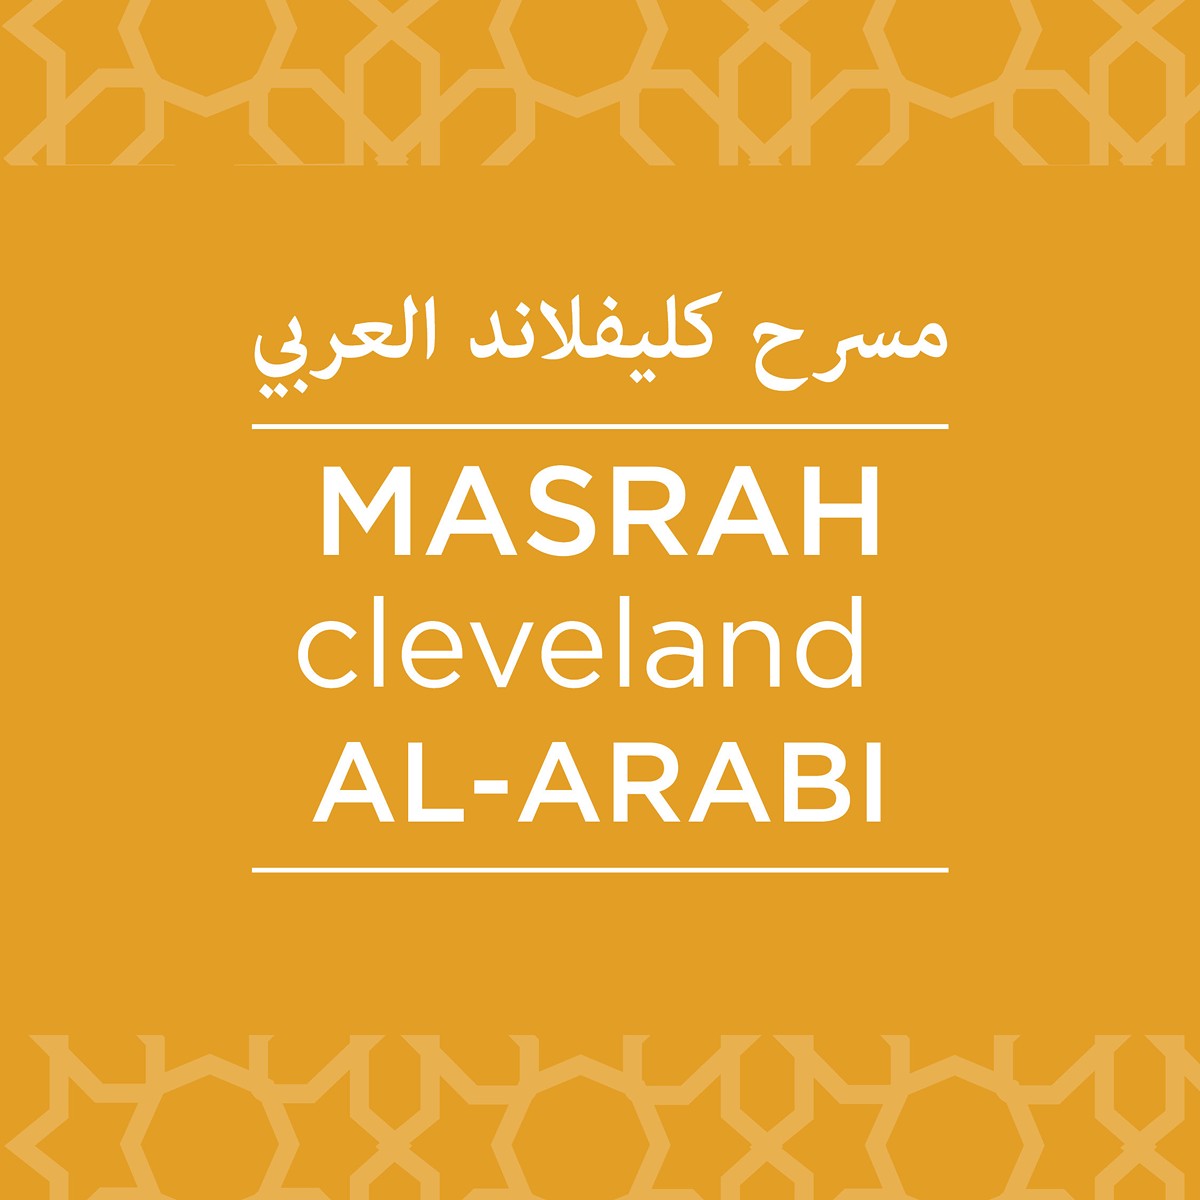 3_masrah_cleveland_al-arabi_logo.jpg